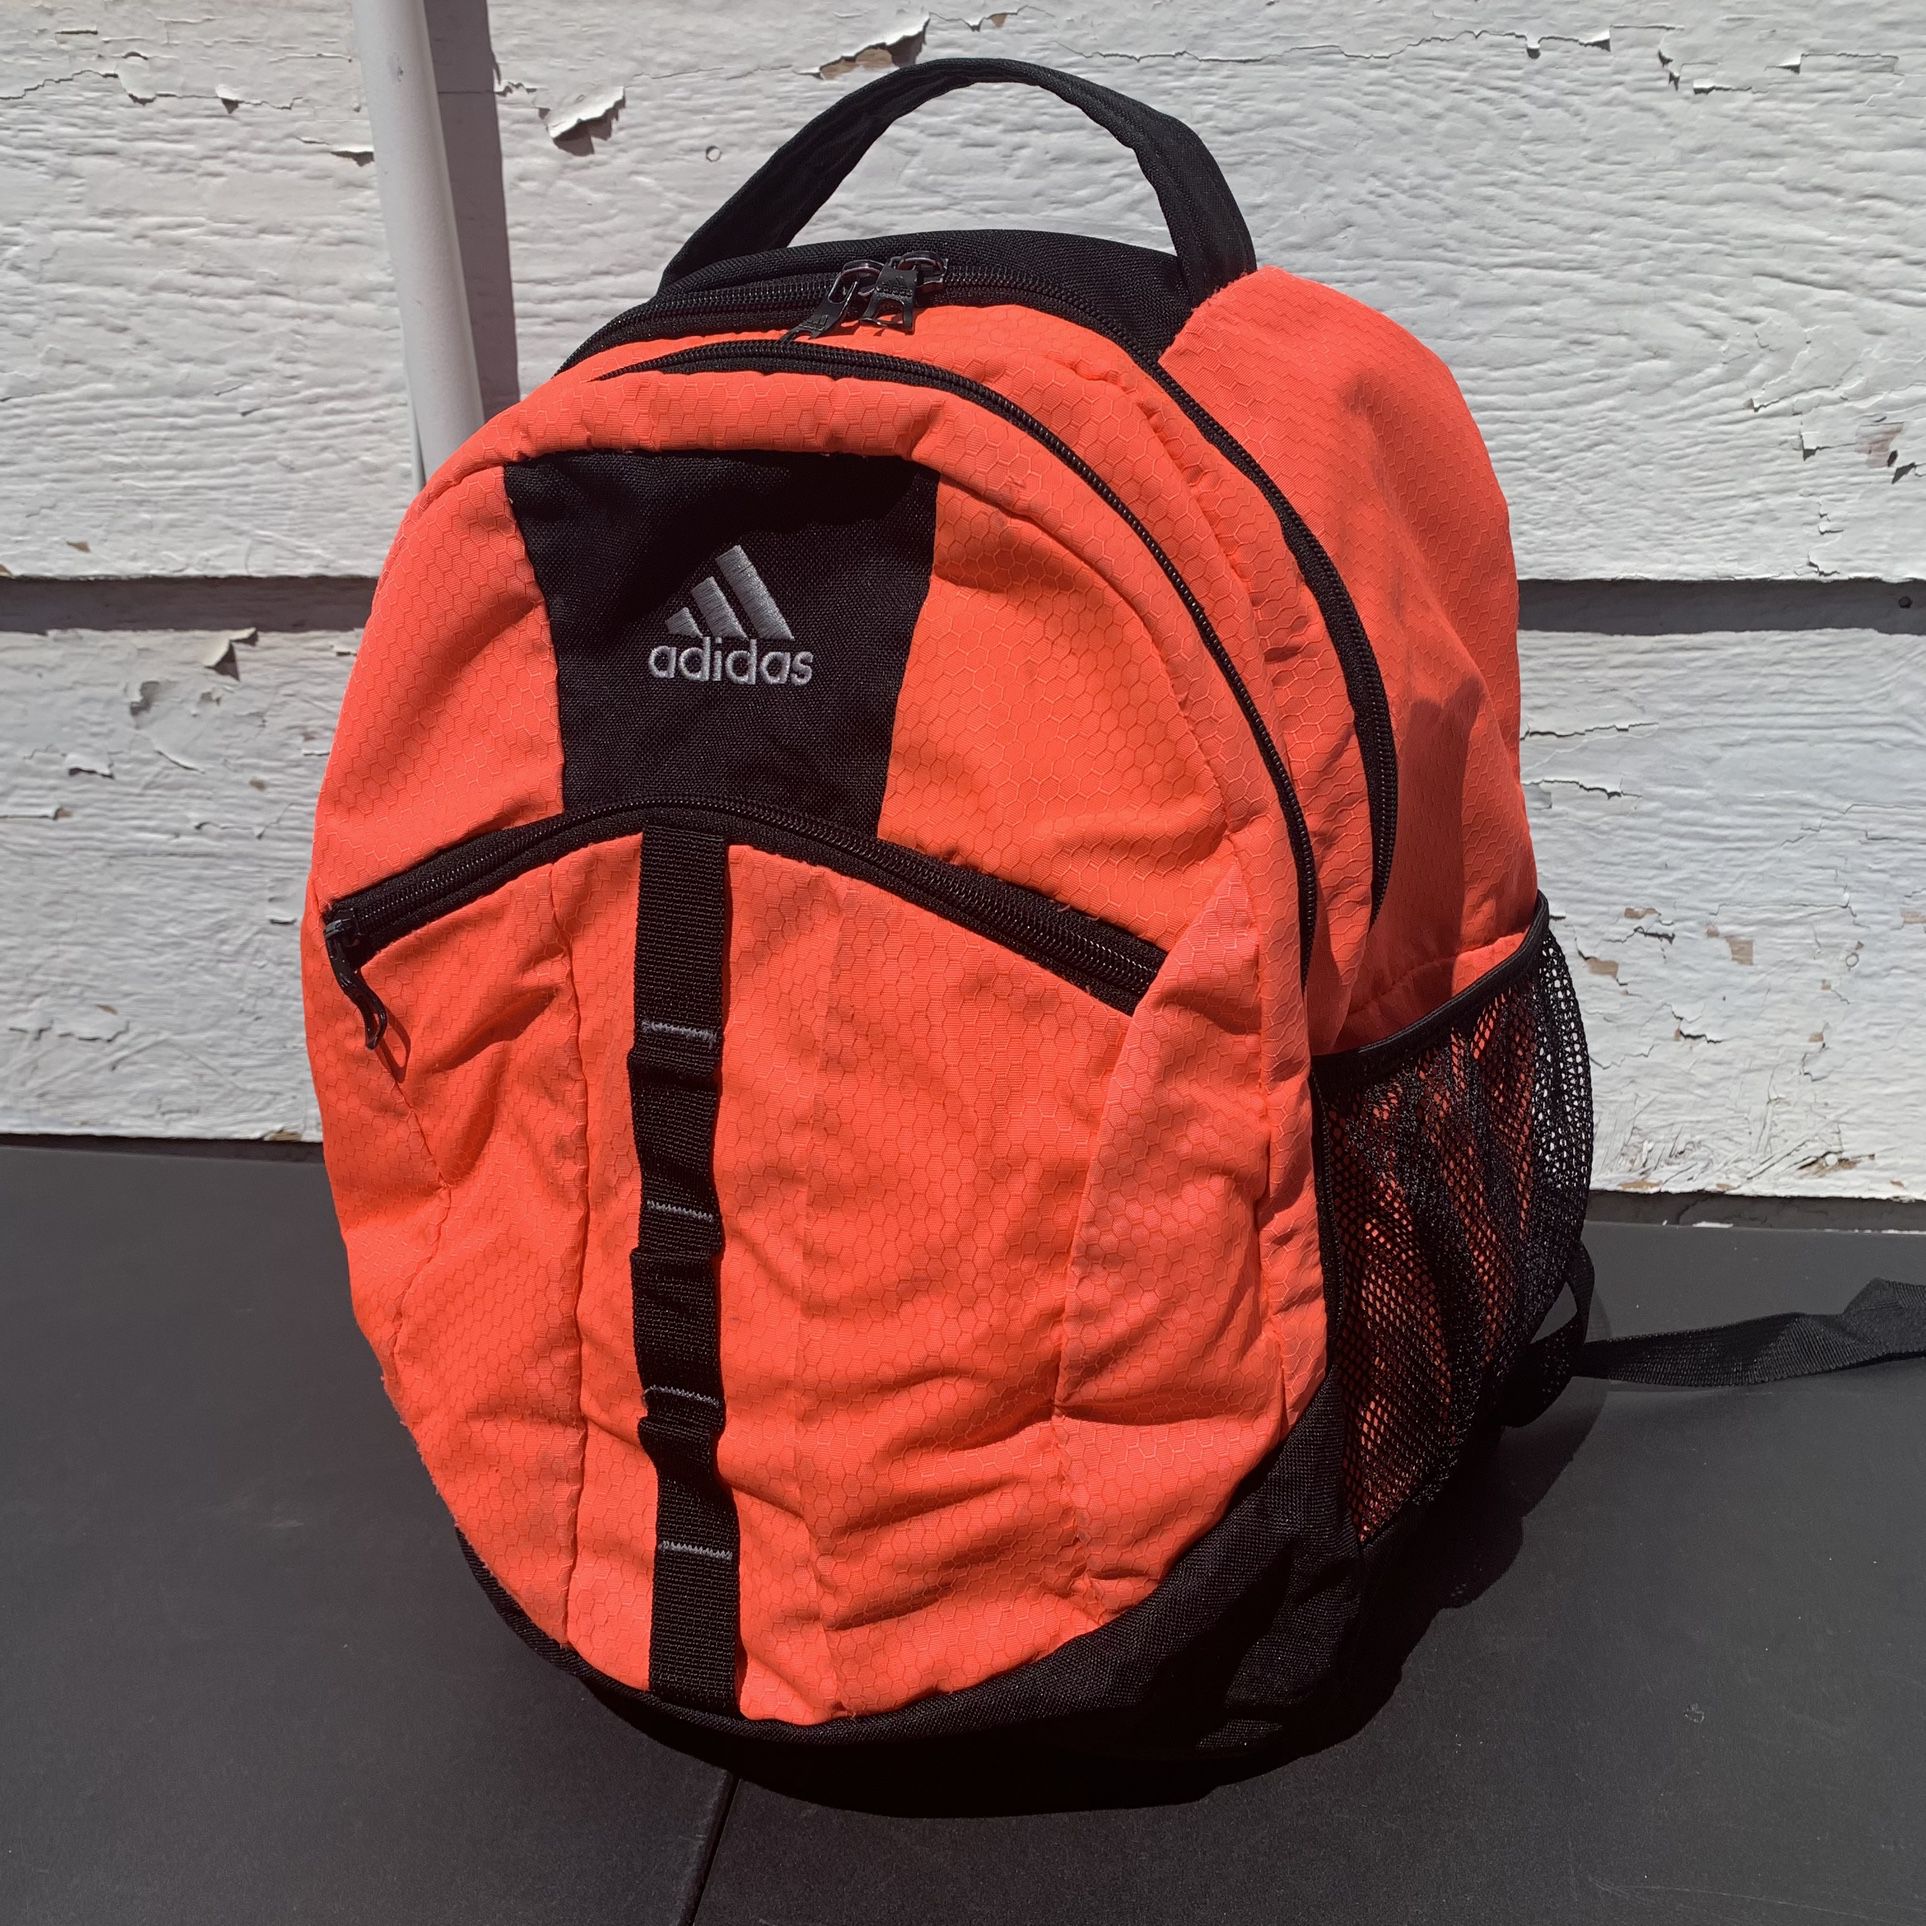 Adidas Hot Pink Backpack 